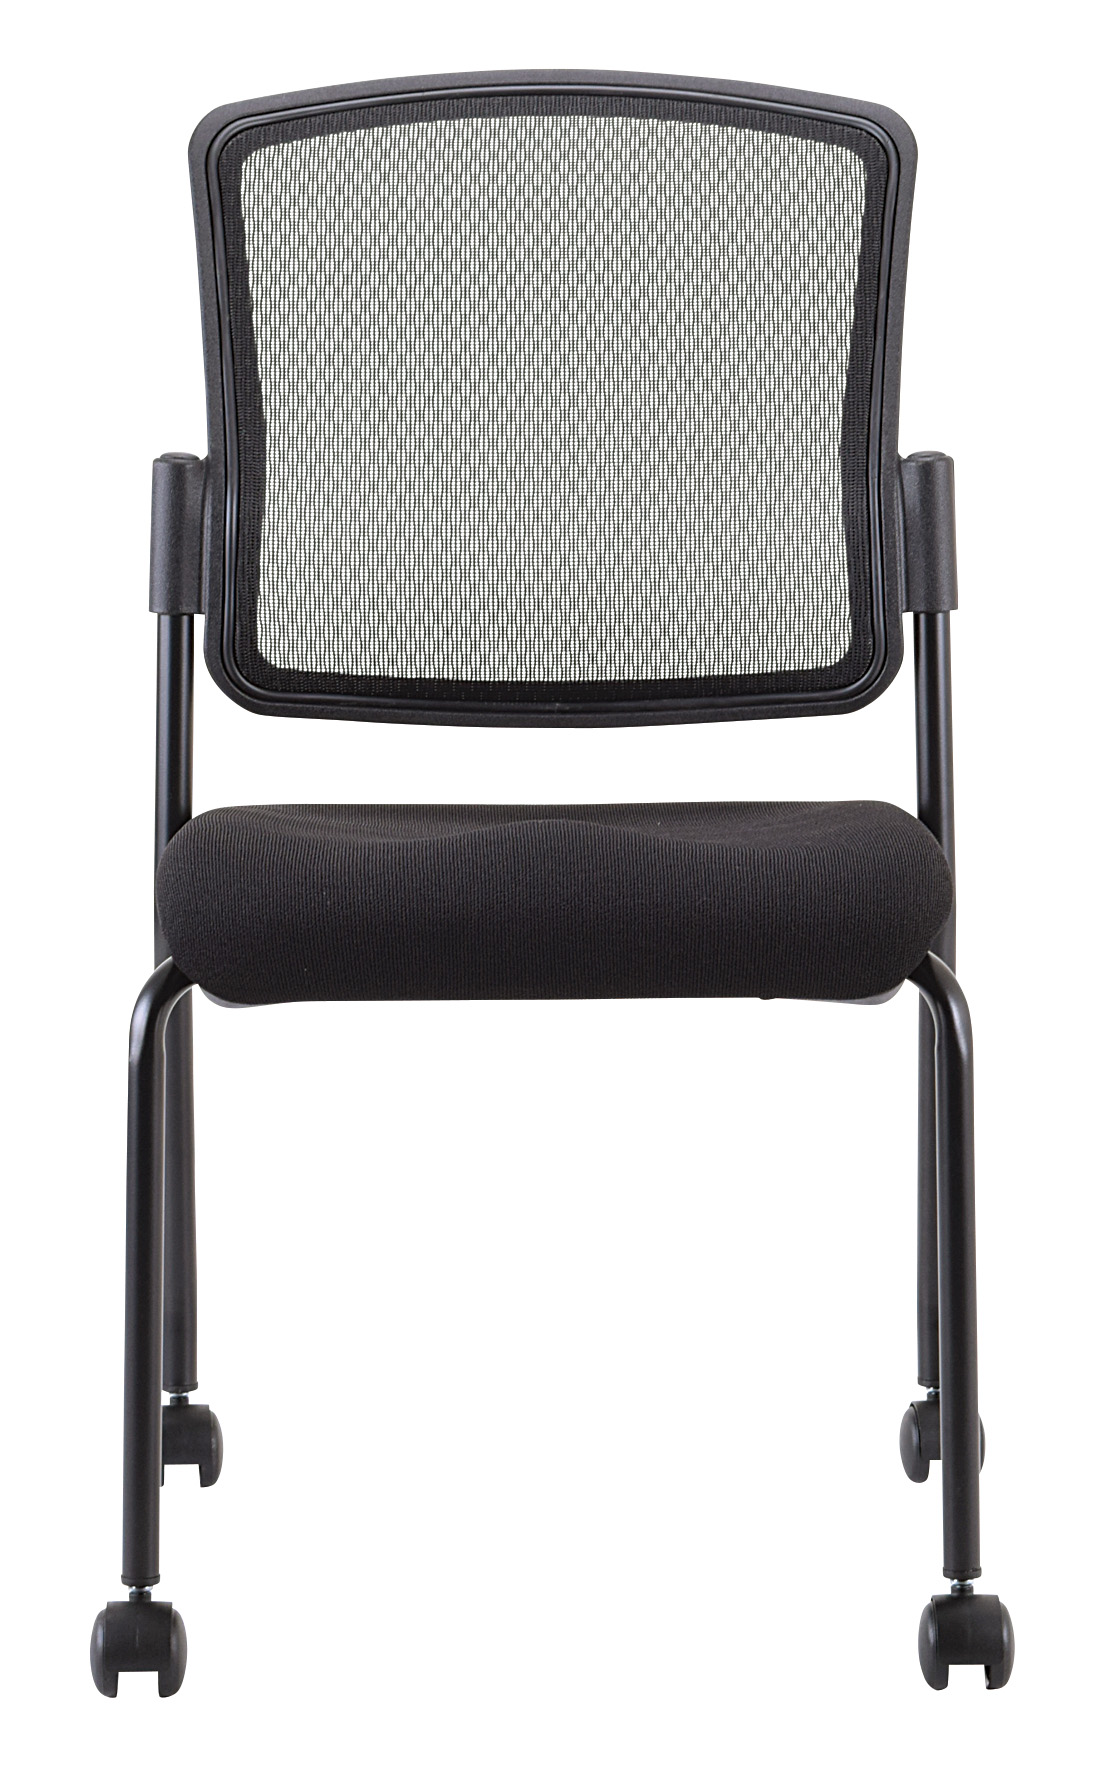 19" x 25" x 35.5" Black Mesh Fabric Guest Chair